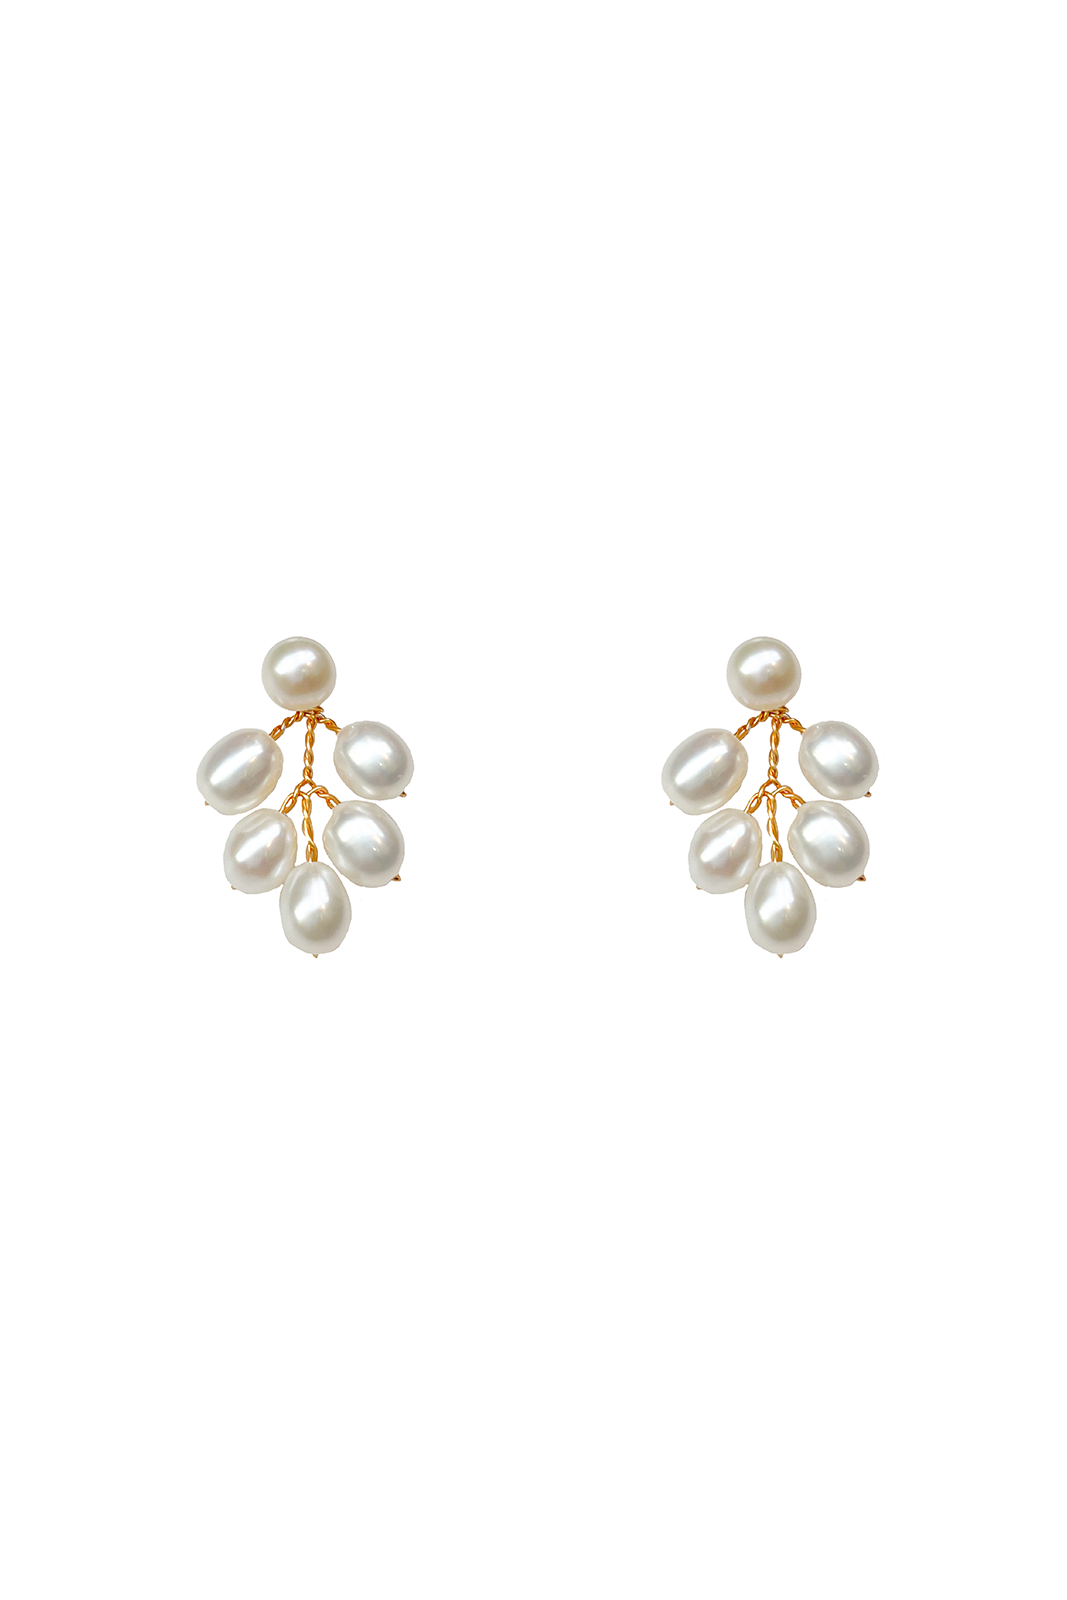 Kensington Grande Pearl Earrings - Silver